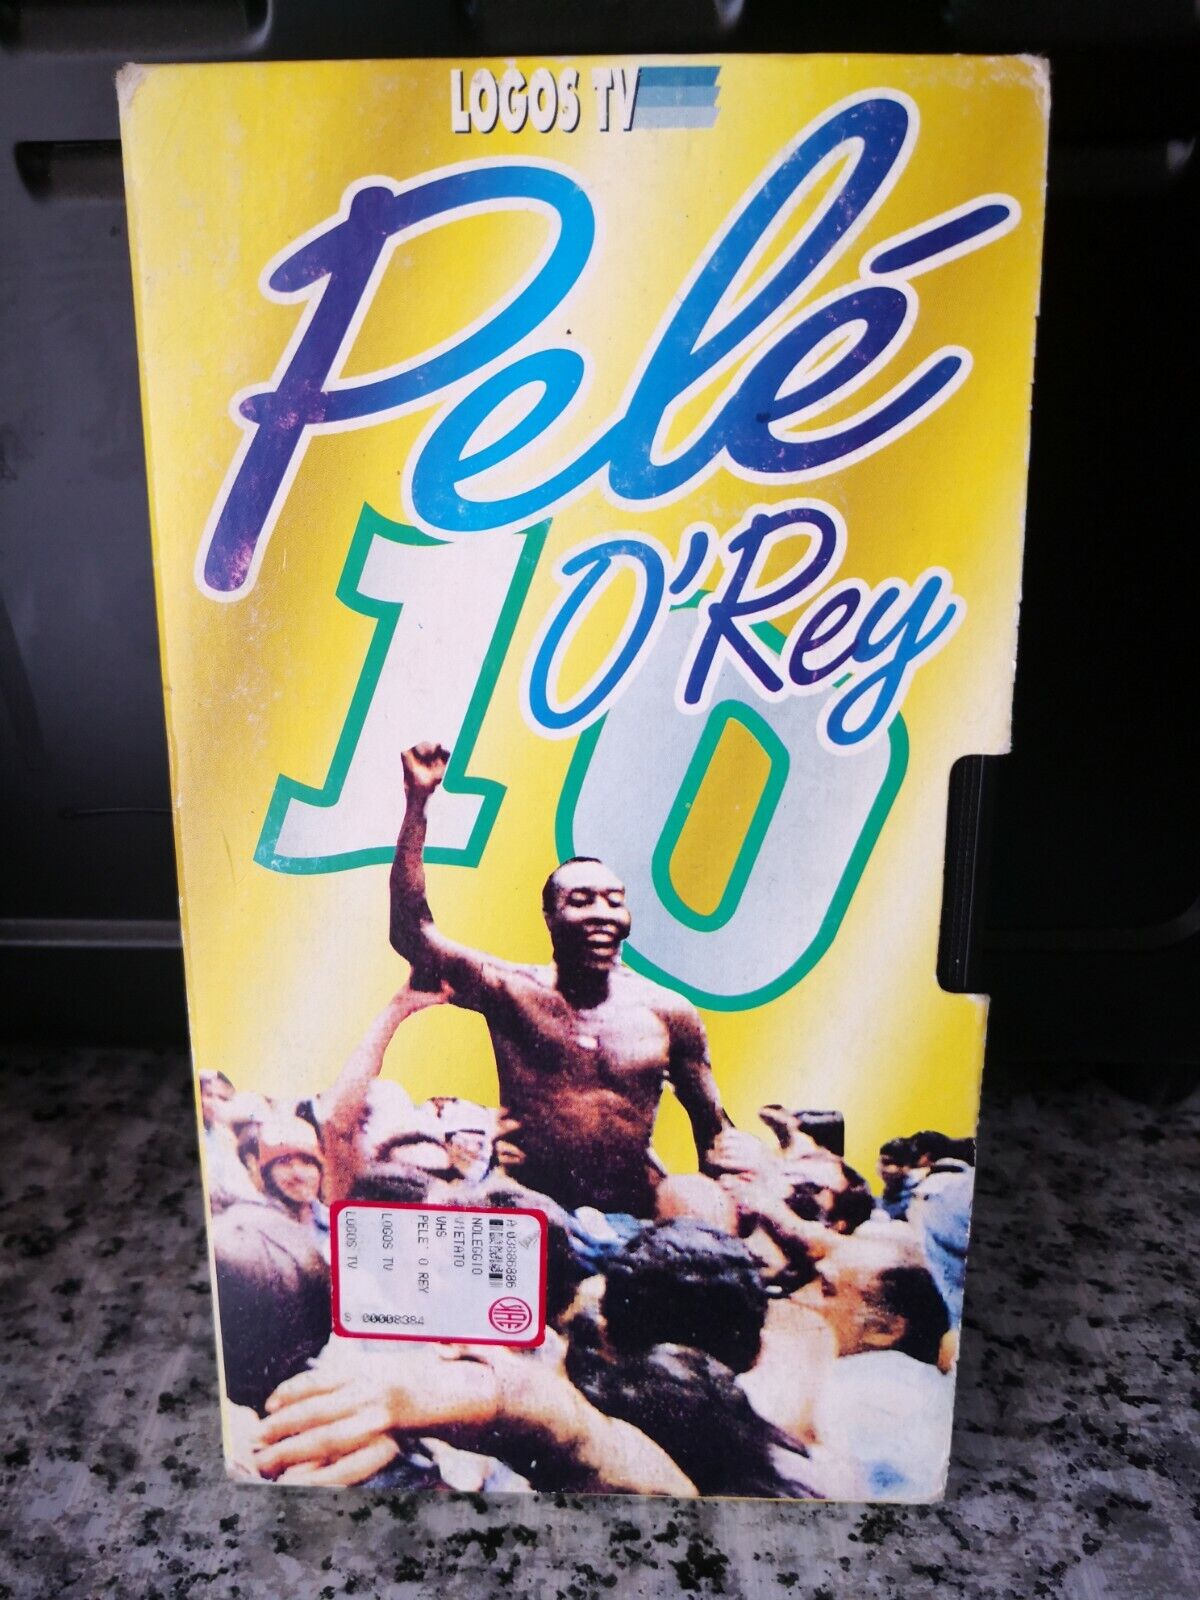 Pel? 10 O' Rey - Vhs - 1995 - Logos tv -F vhs usato